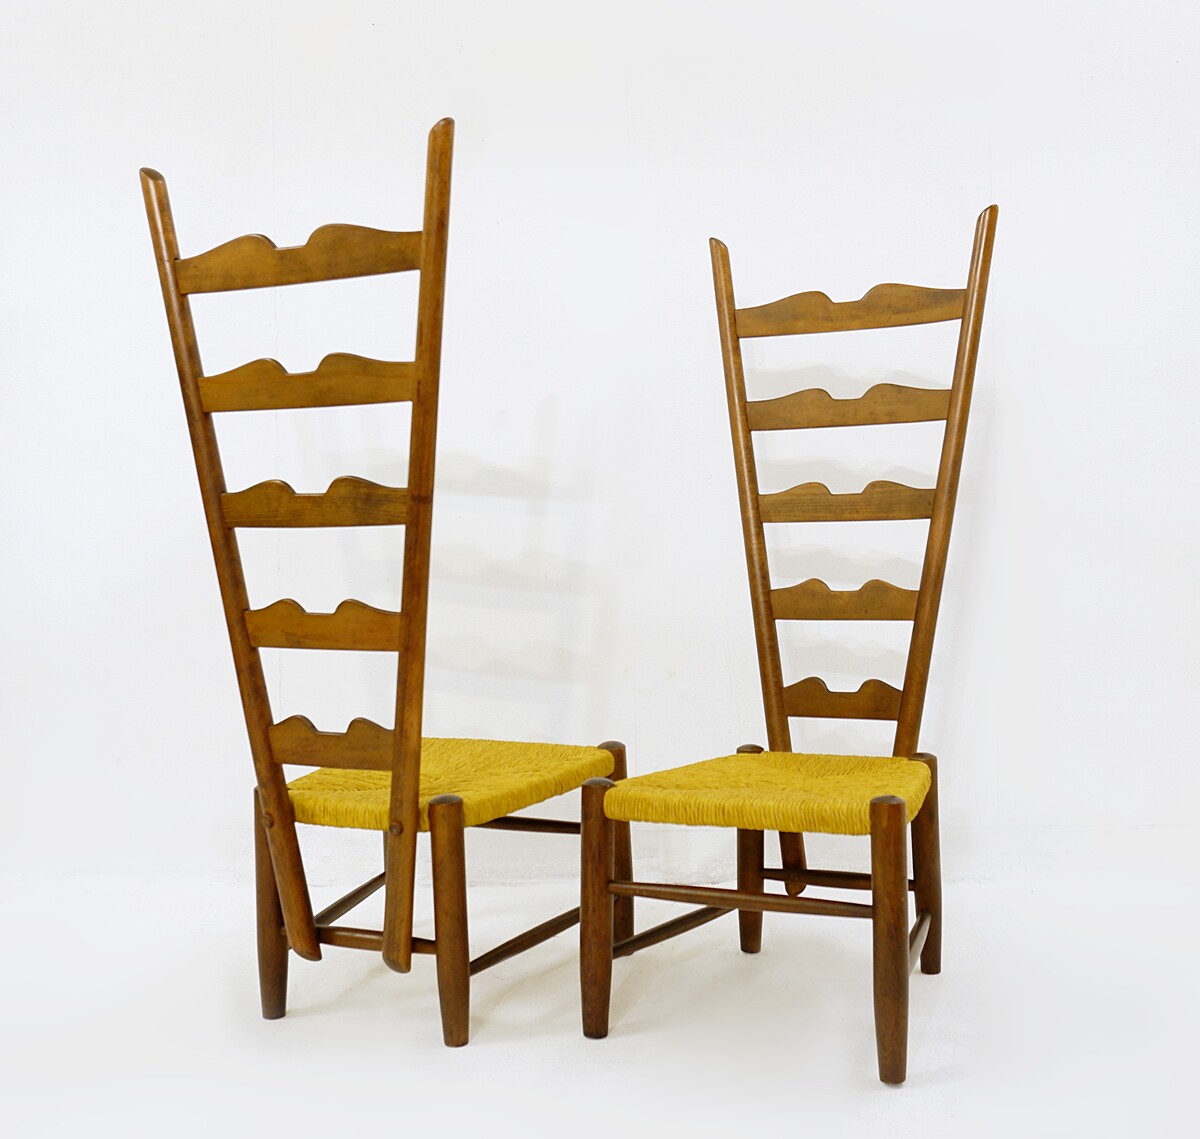 pair-of-chairs-by-gio-ponti-for-casa-e-giardino-milan-italy-circa-1939-5018409-en-max.jpg